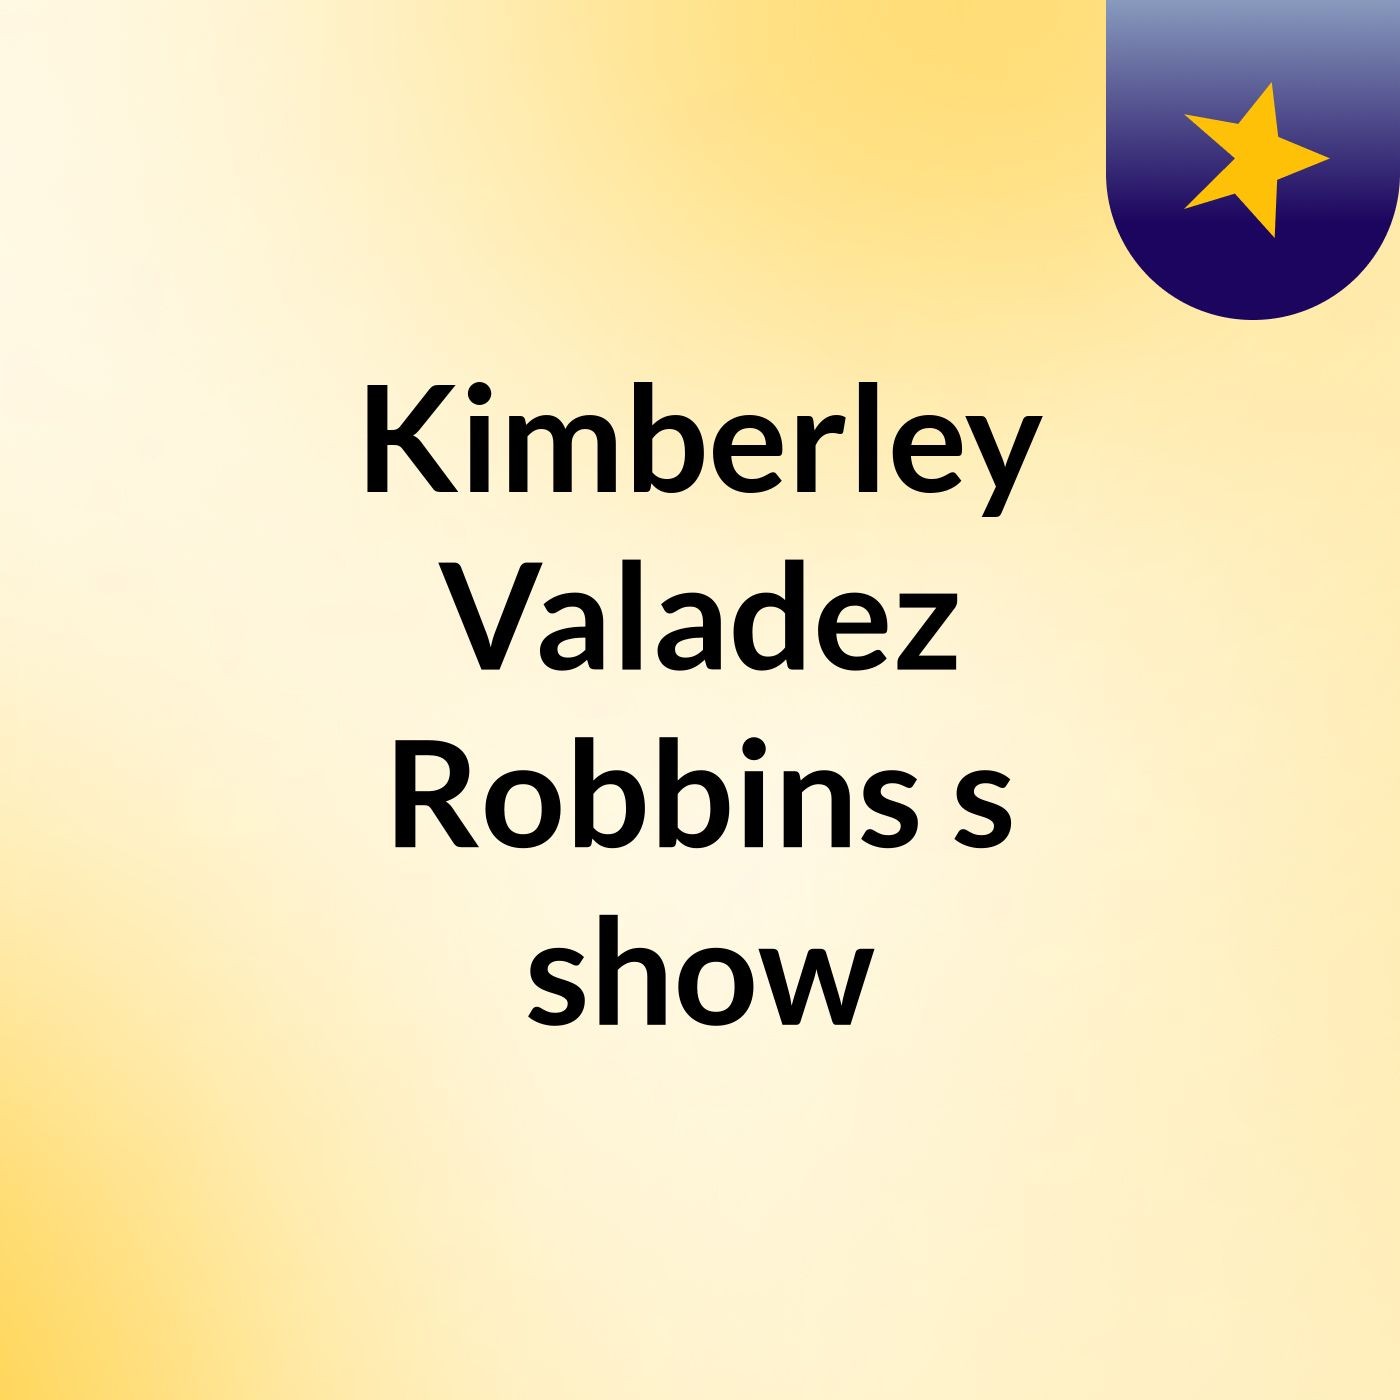 Kimberley Valadez Robbins's show